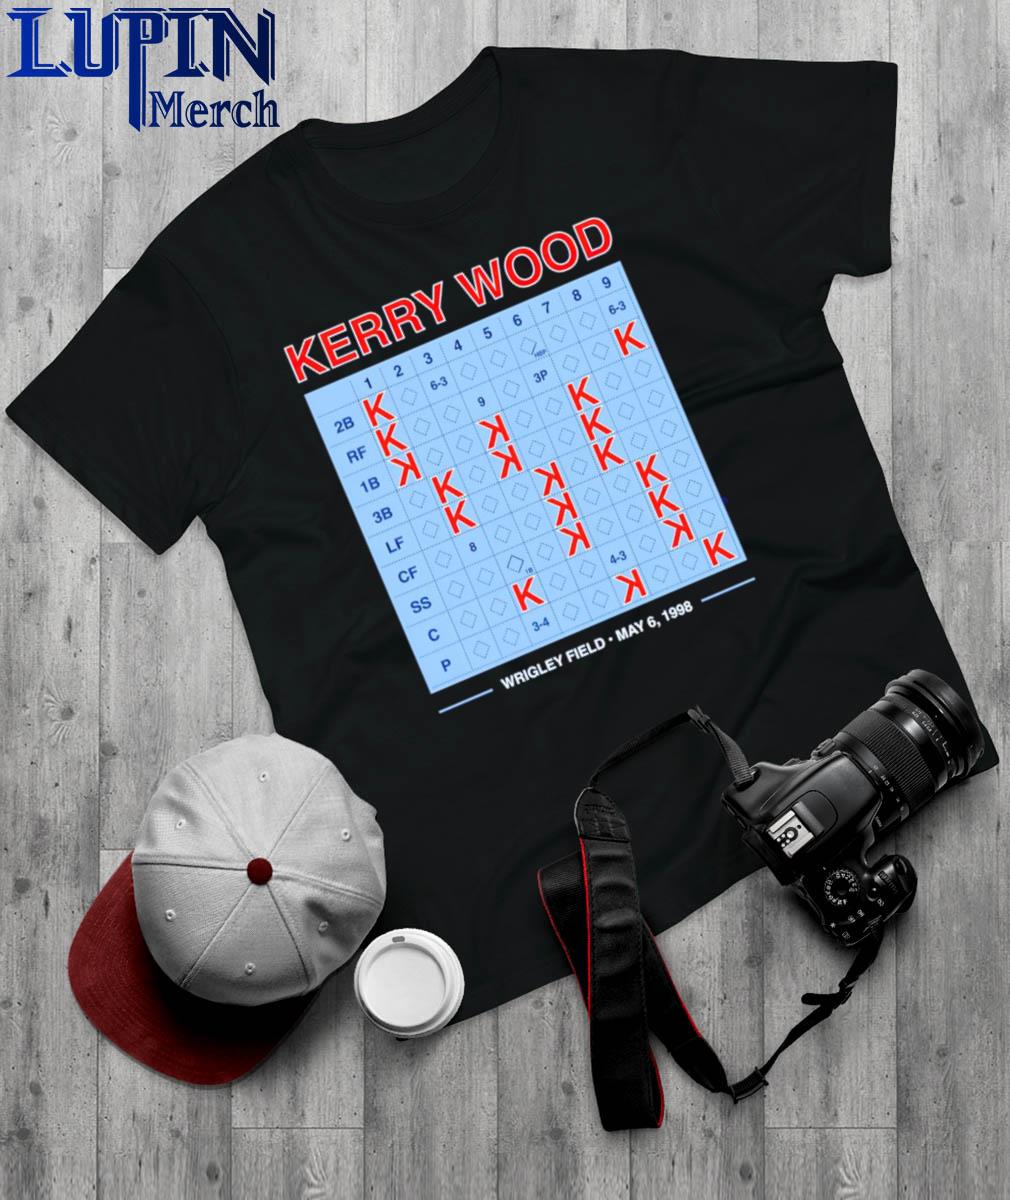 Kerry Wood 20 Strikeouts Scorecard Shirt, hoodie, sweater, long